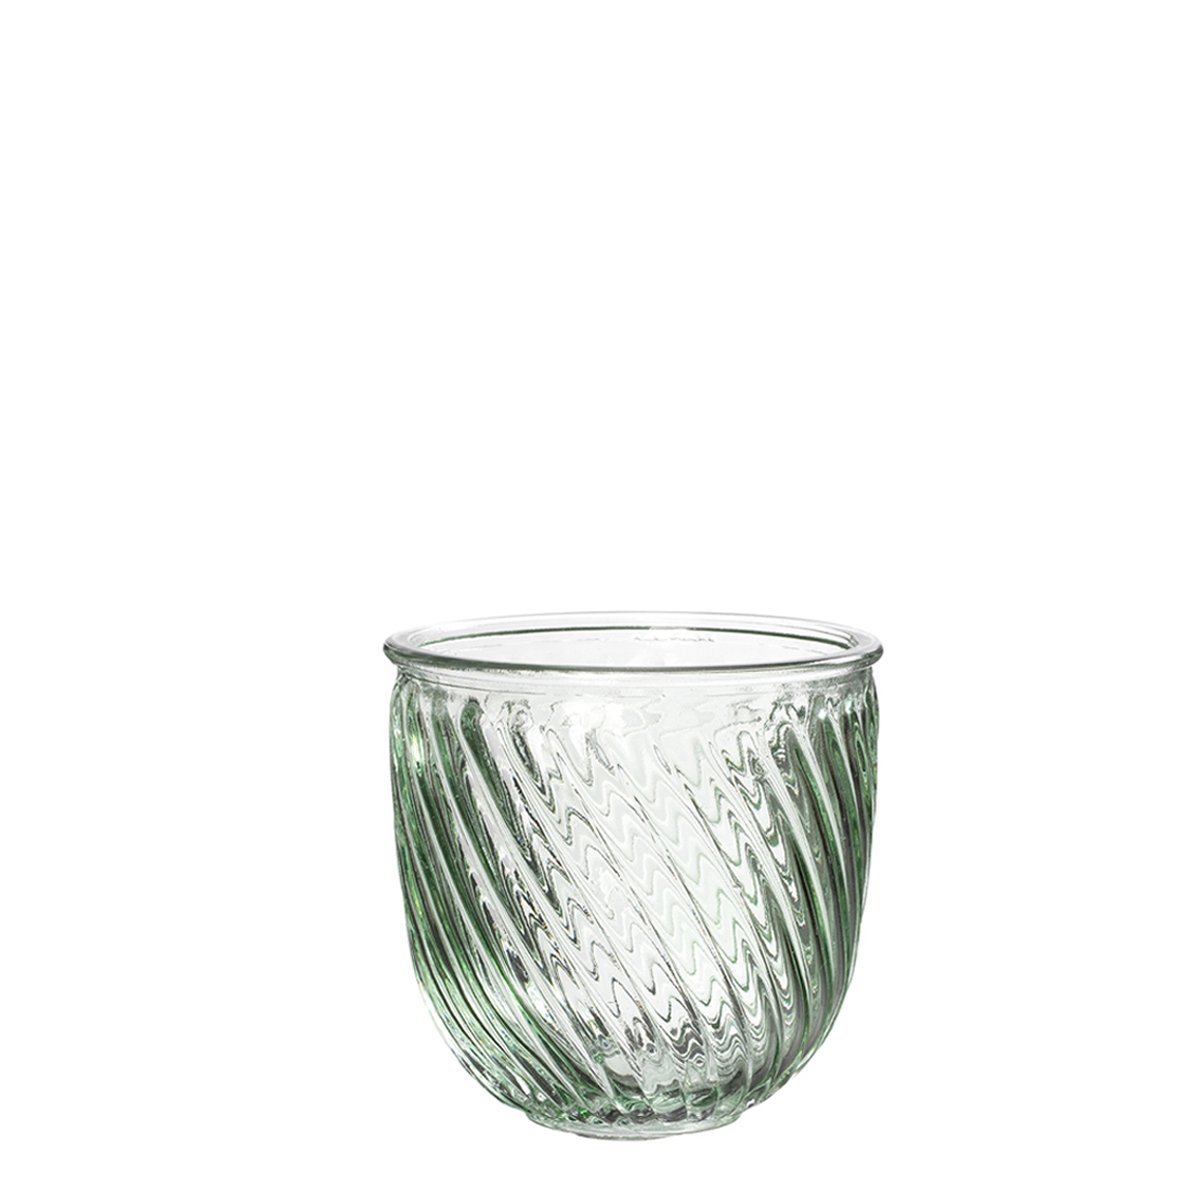 Potteformet vase
H: 12 cm